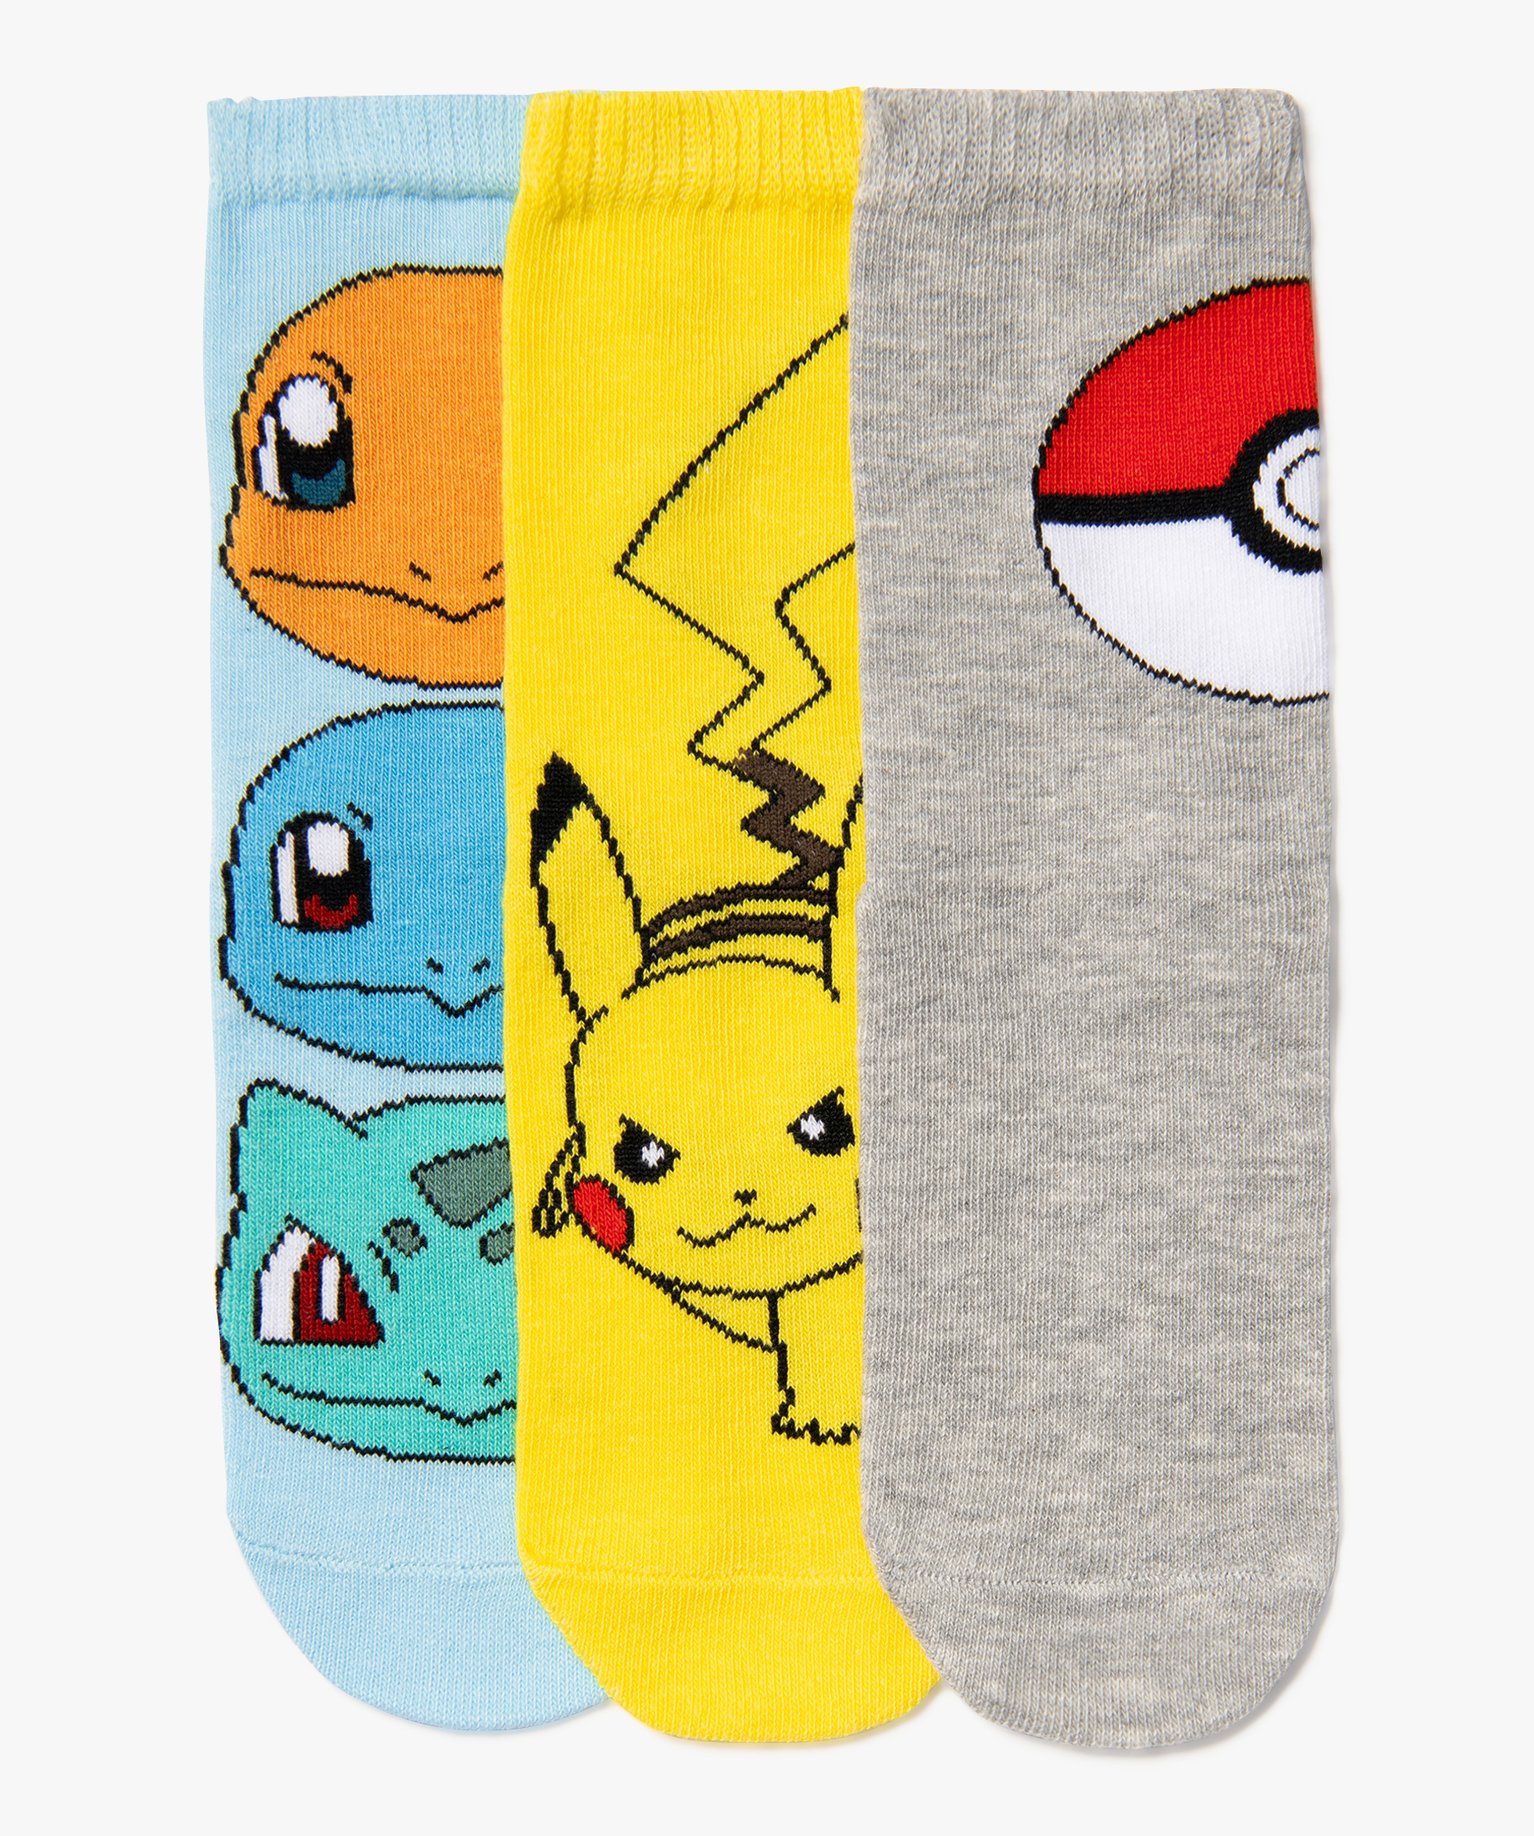 Chaussettes à motifs garçon (lot de 3) - Pokemon - 24/26 - jaune standard - POKEMON